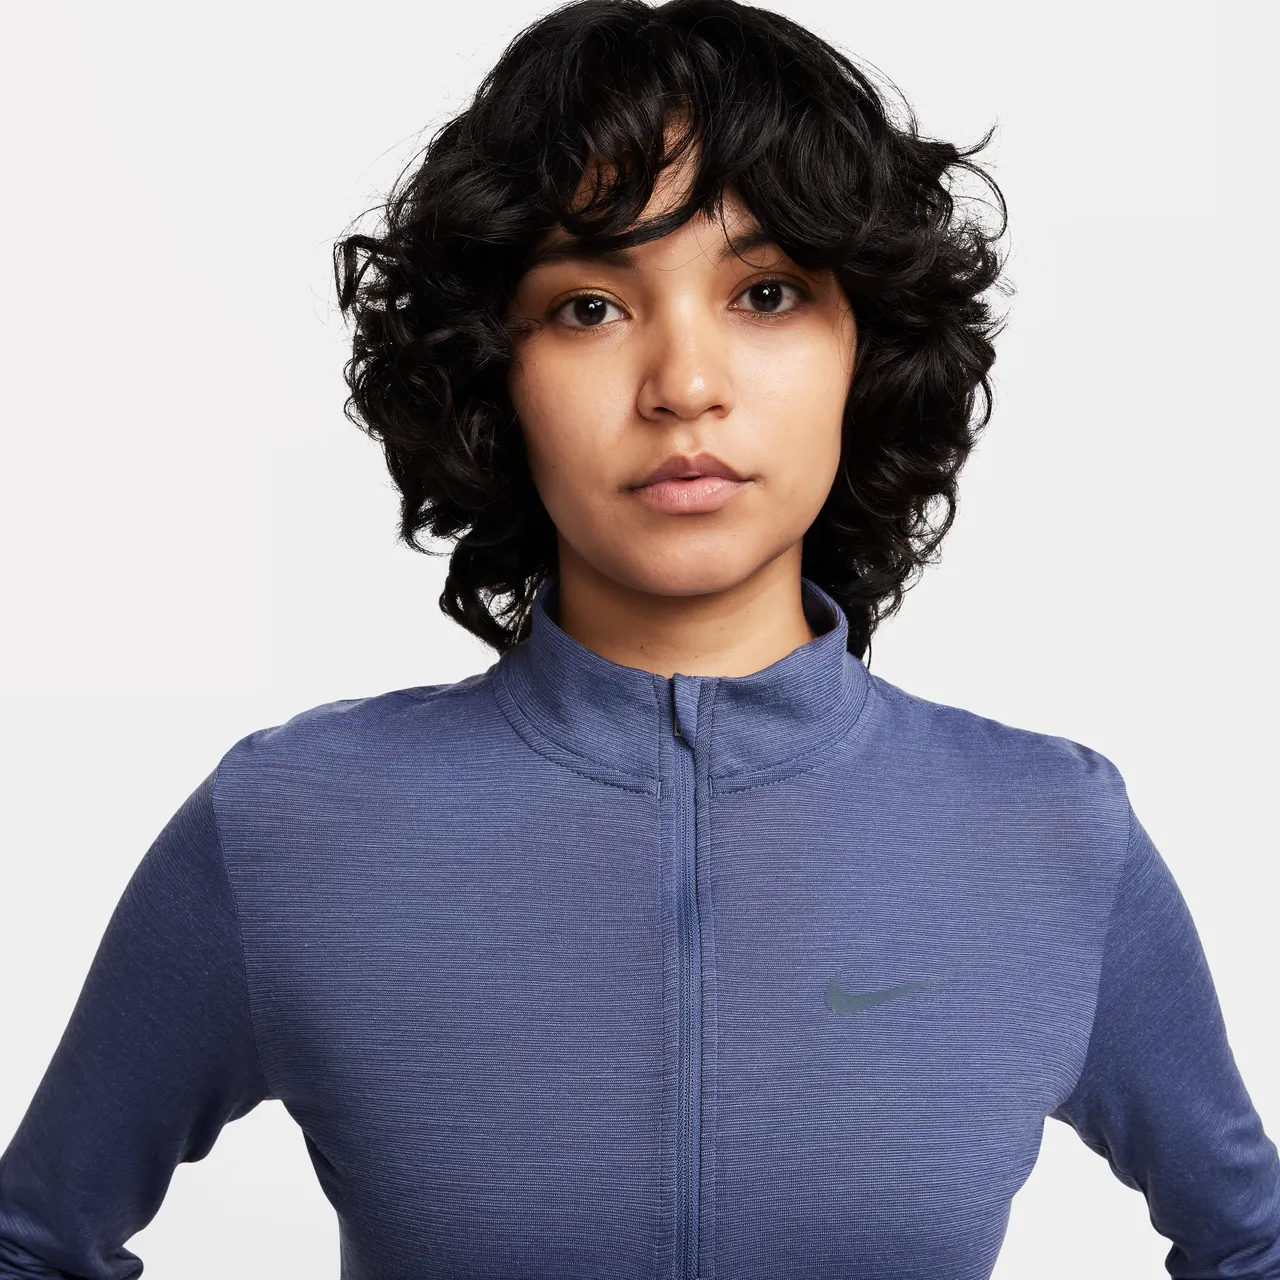 Nike Dri-FIT Swift Women's Long-Sleeve Wool Running Top - Blue - Nylon